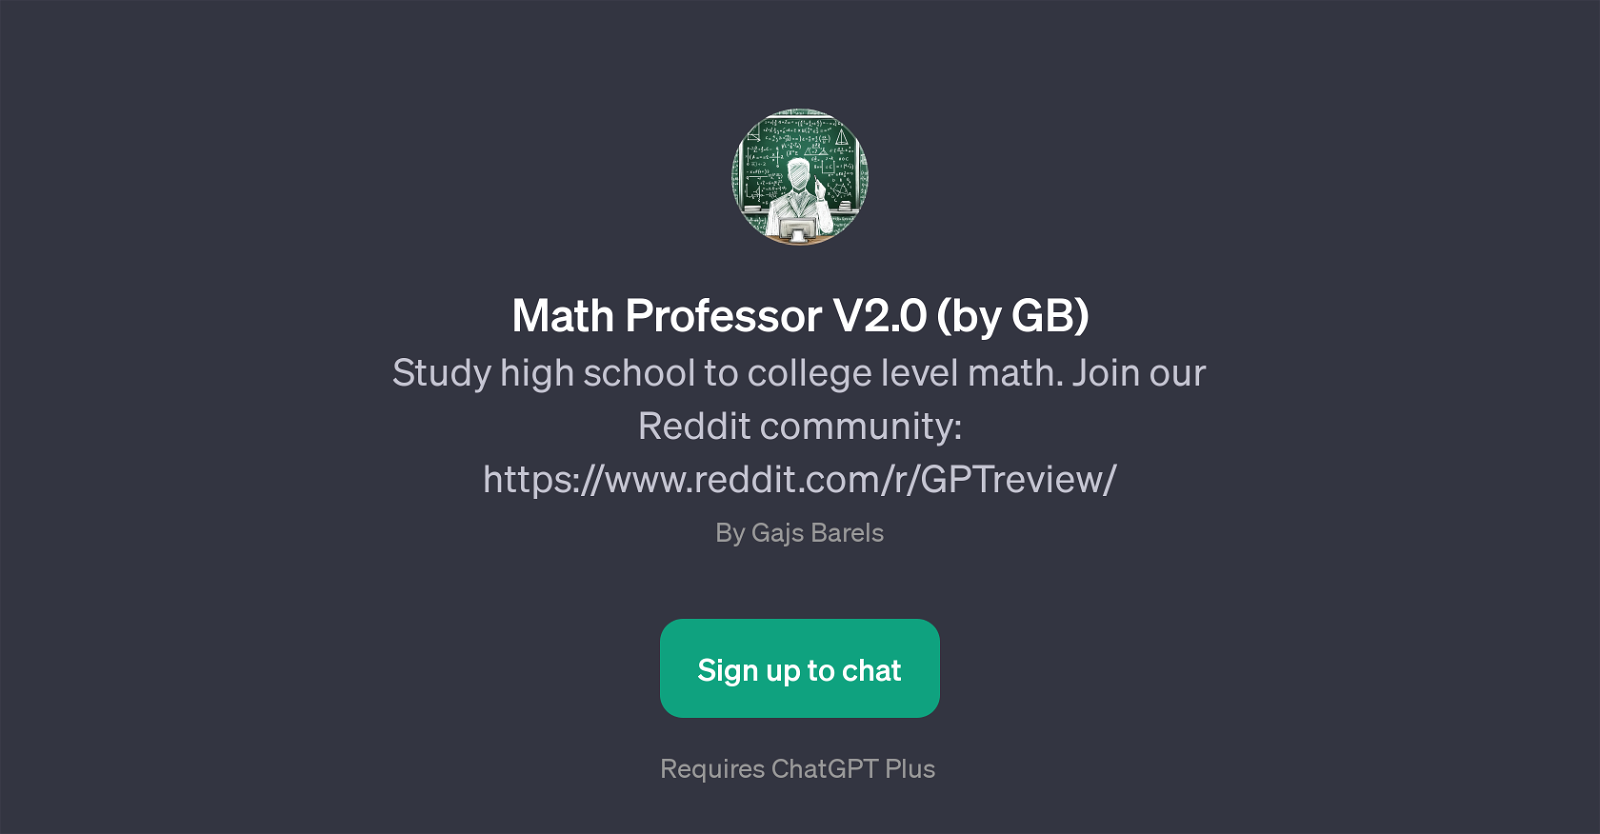 Math Professor V2.0 (by GB) website